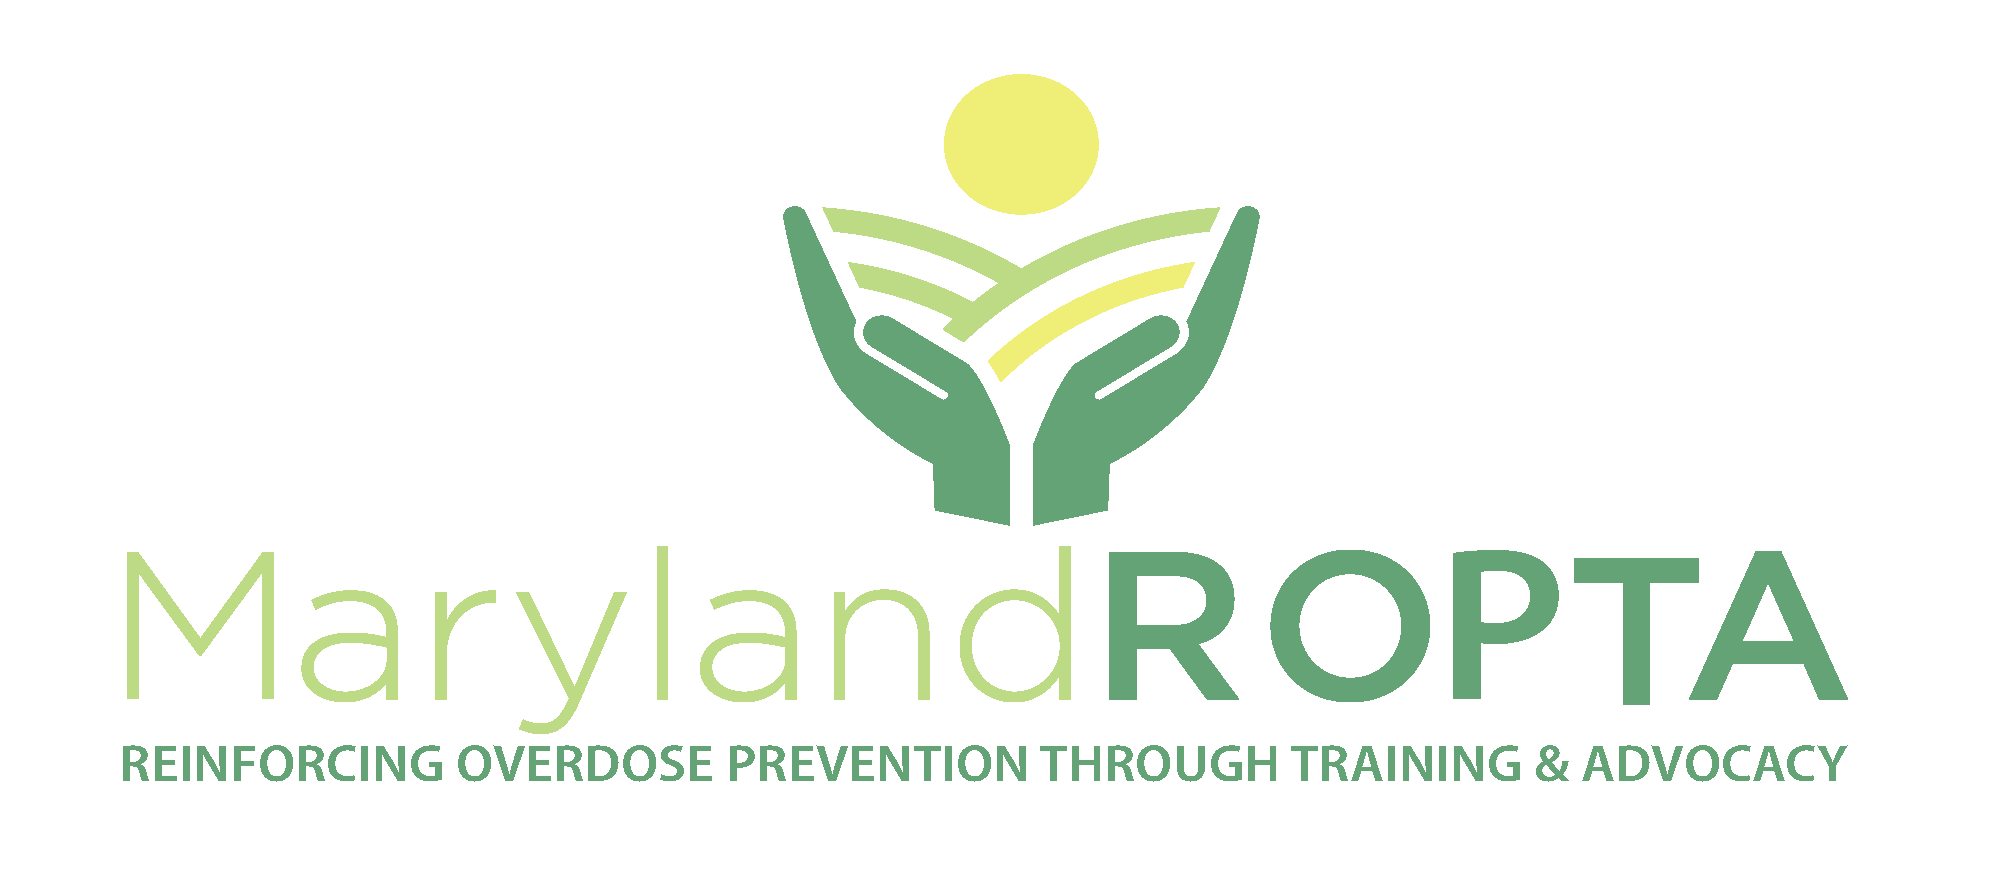 Maryland ROPTA logo